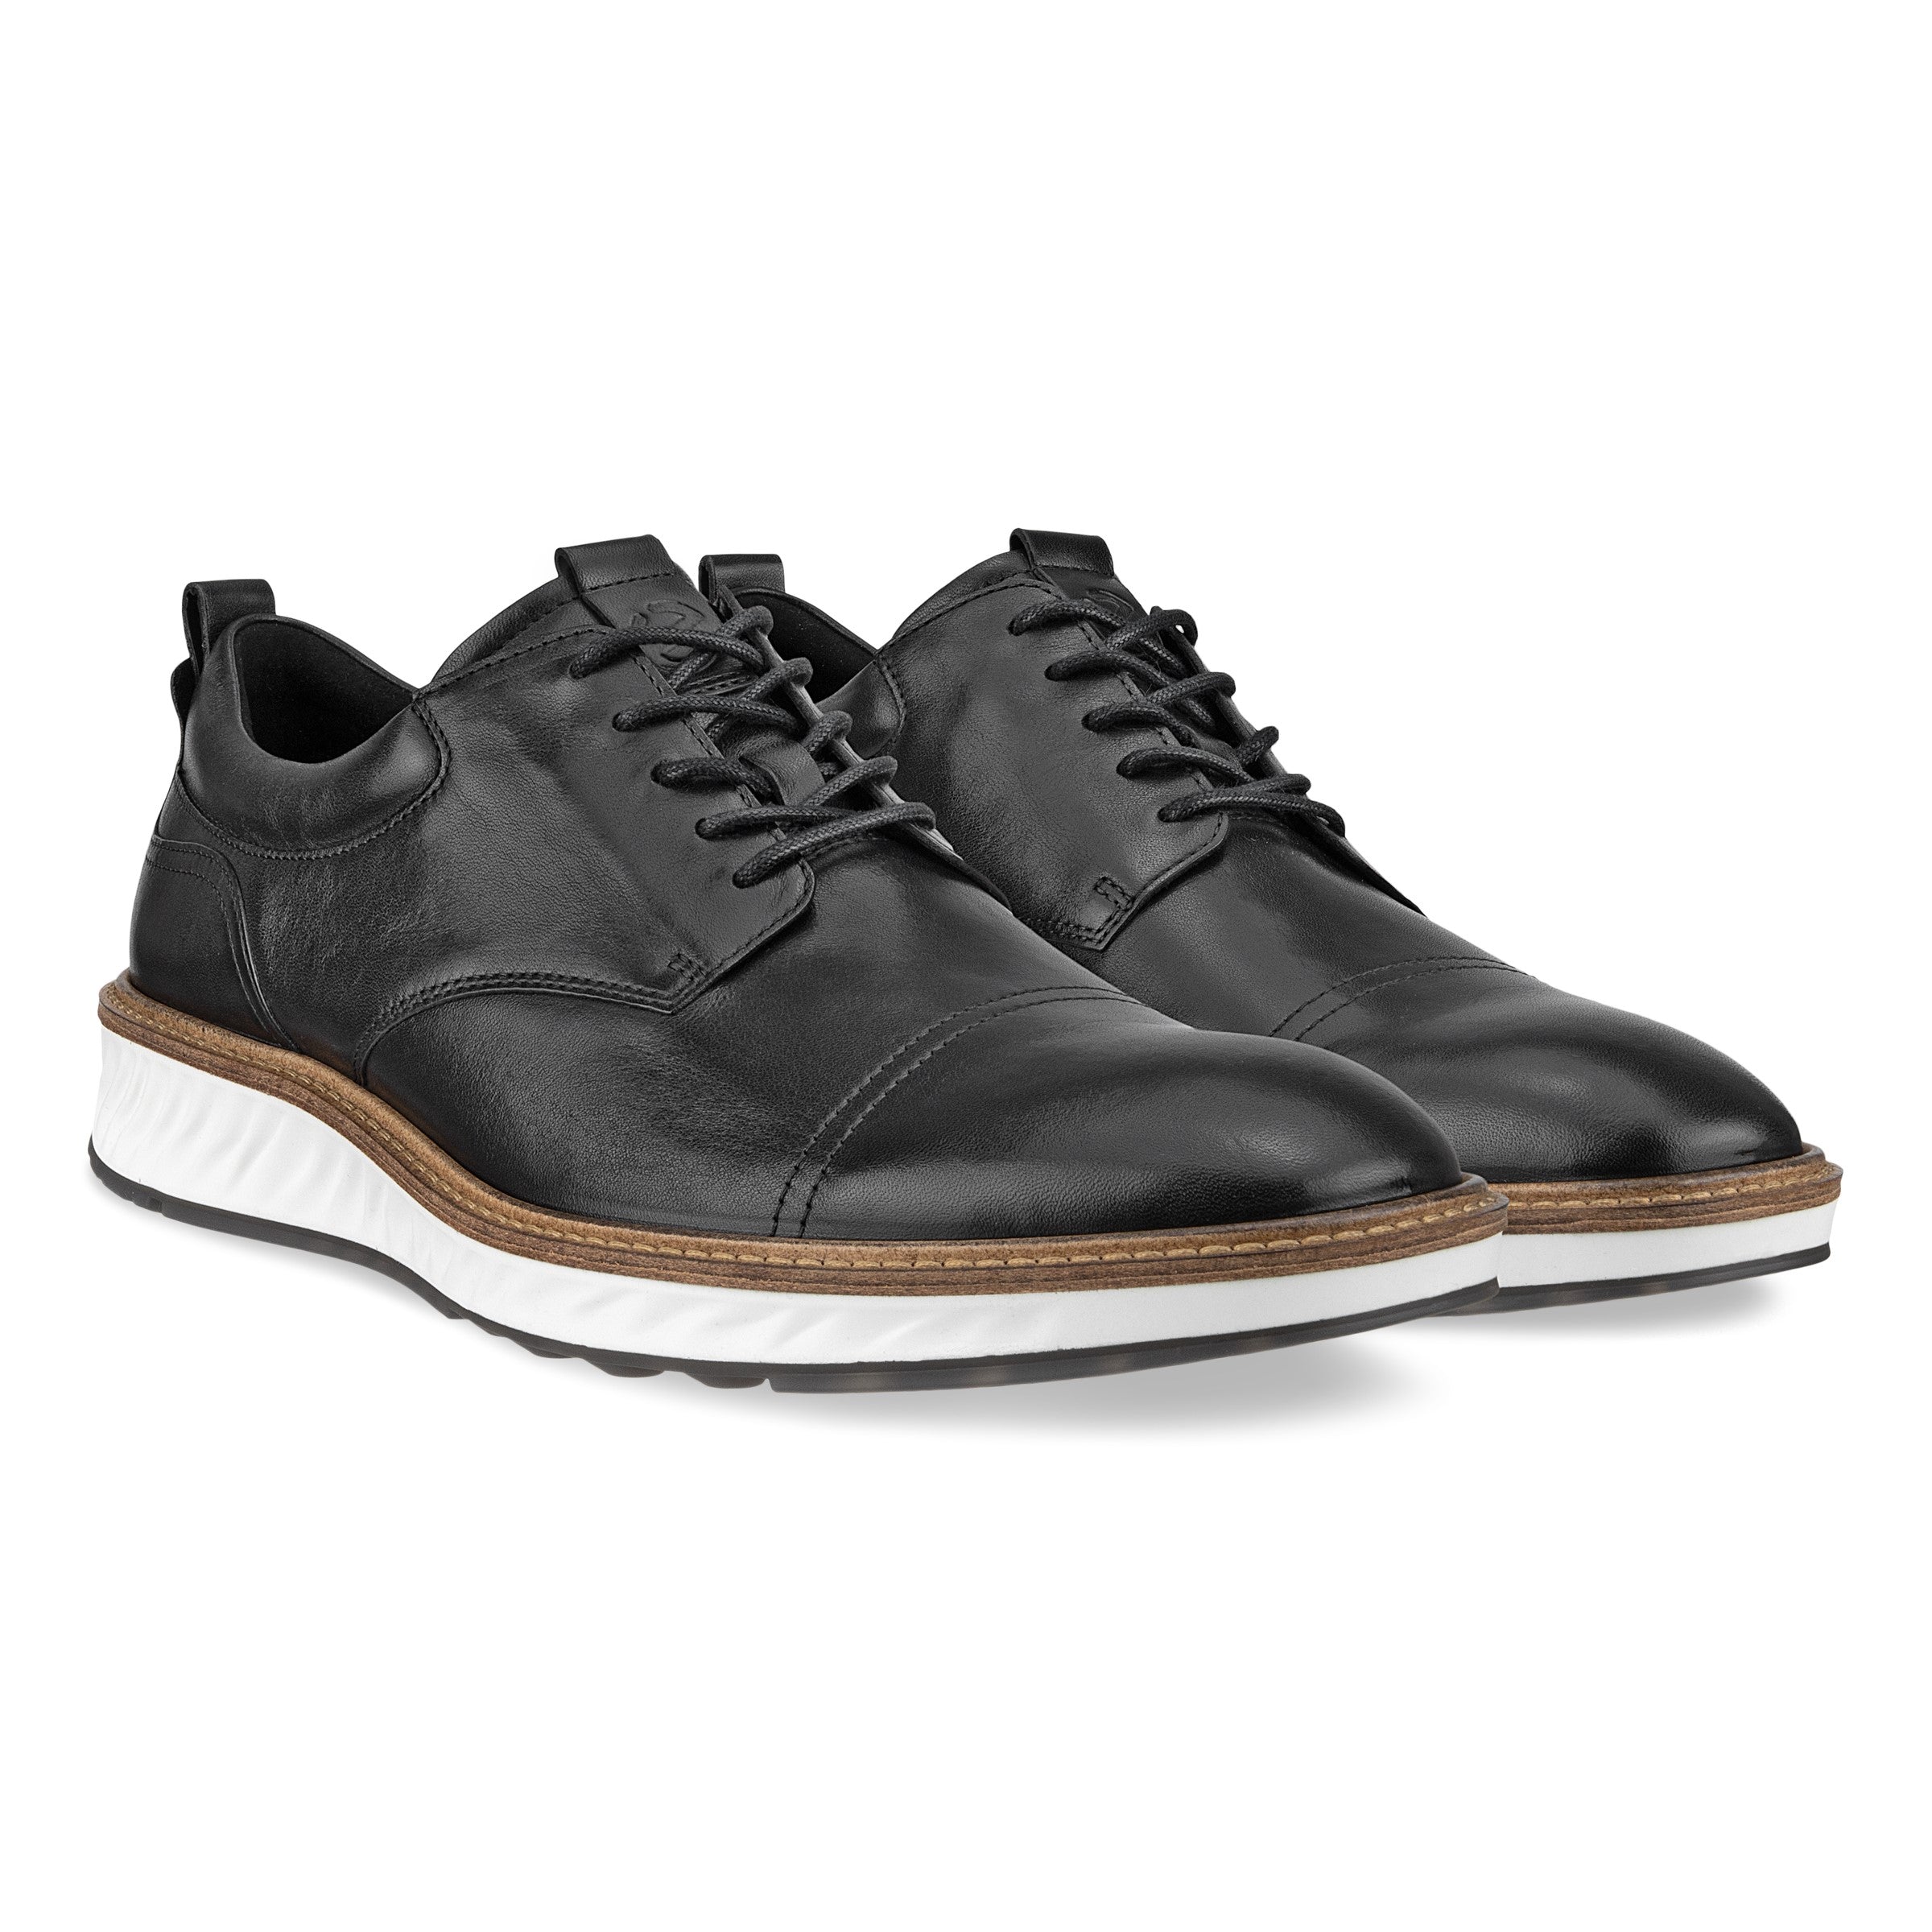 Men's Ecco St.1 Hybrid Derby Shoe Color: Black